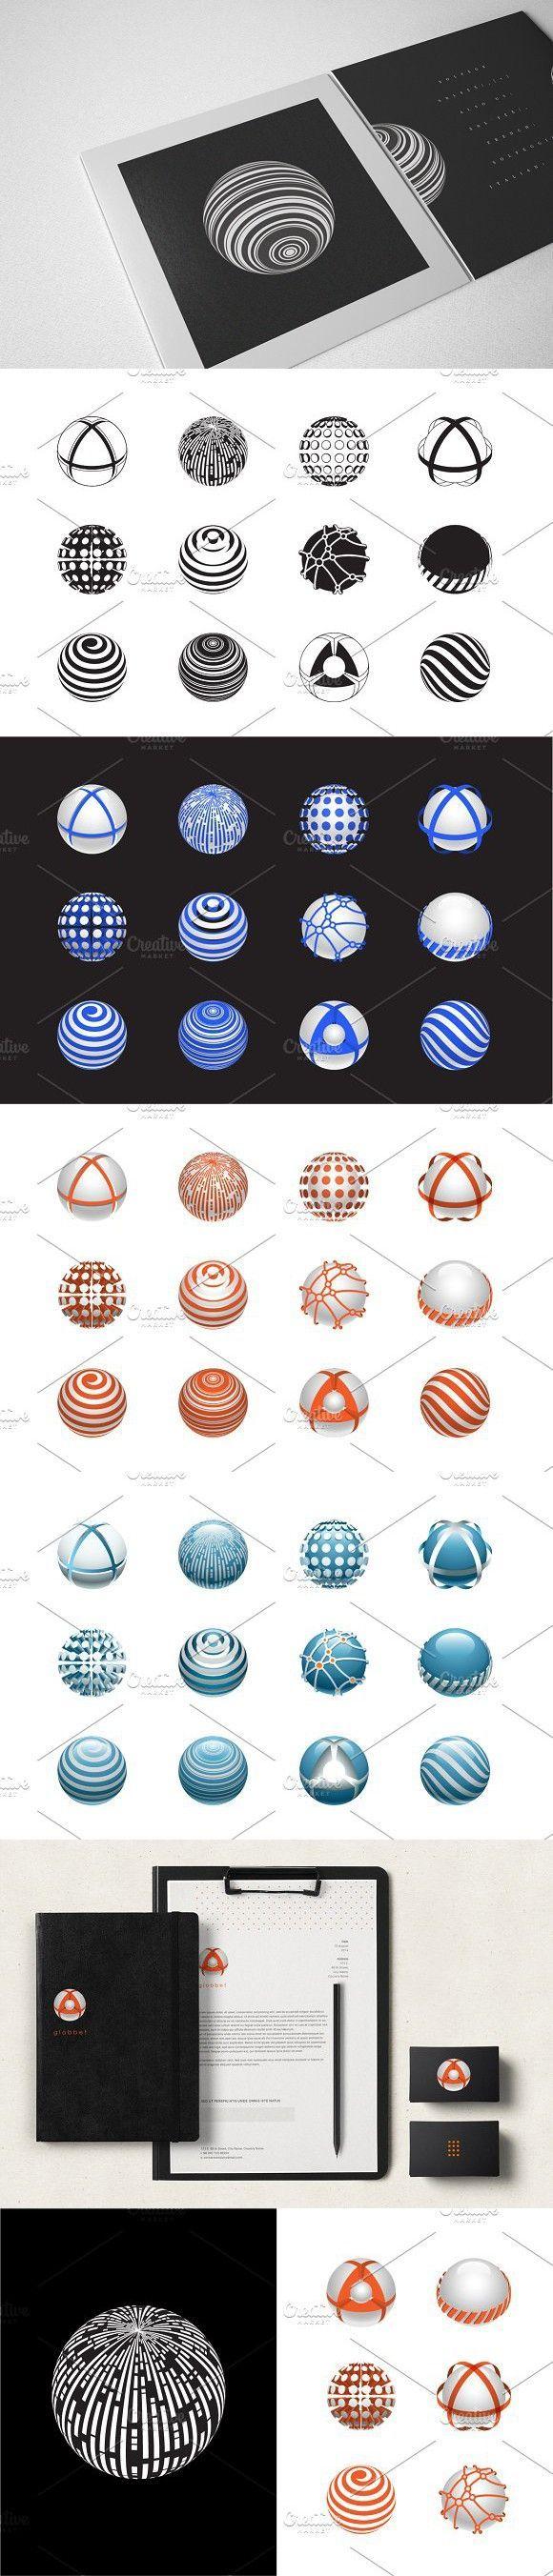 Shiny Globe Logo - Sphere Logo Set 3 | Shiny Design | Pinterest | Logos, Logo design ...